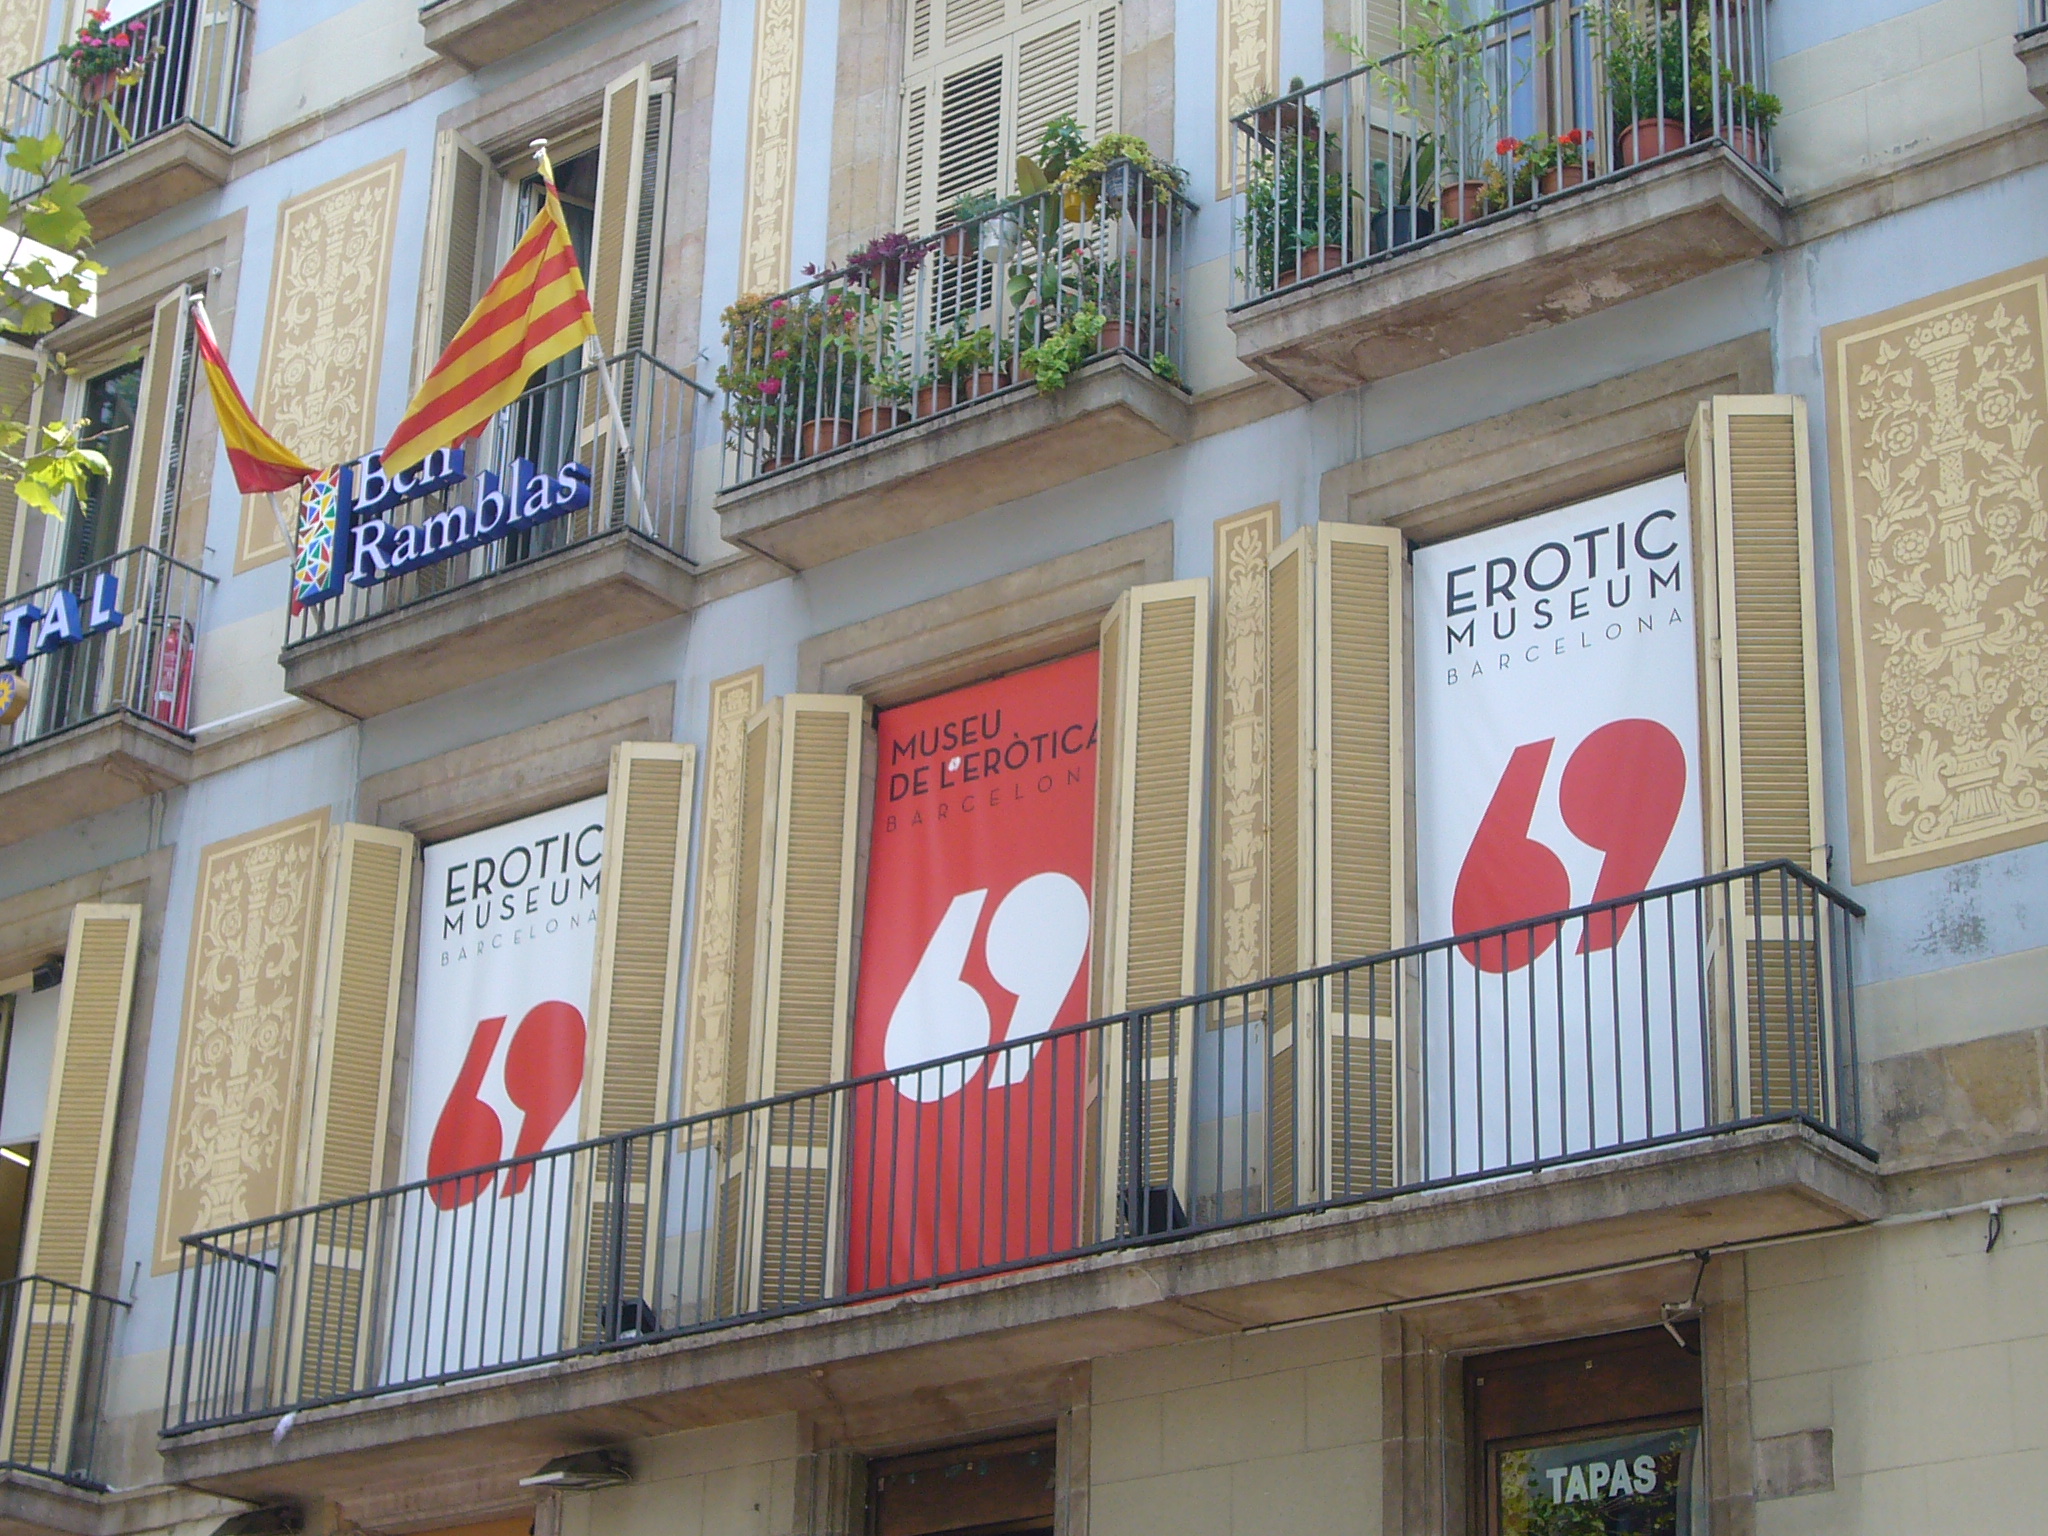 File:Erotic Museum of Barcelona - facade.JPG - Wikimedia Commons